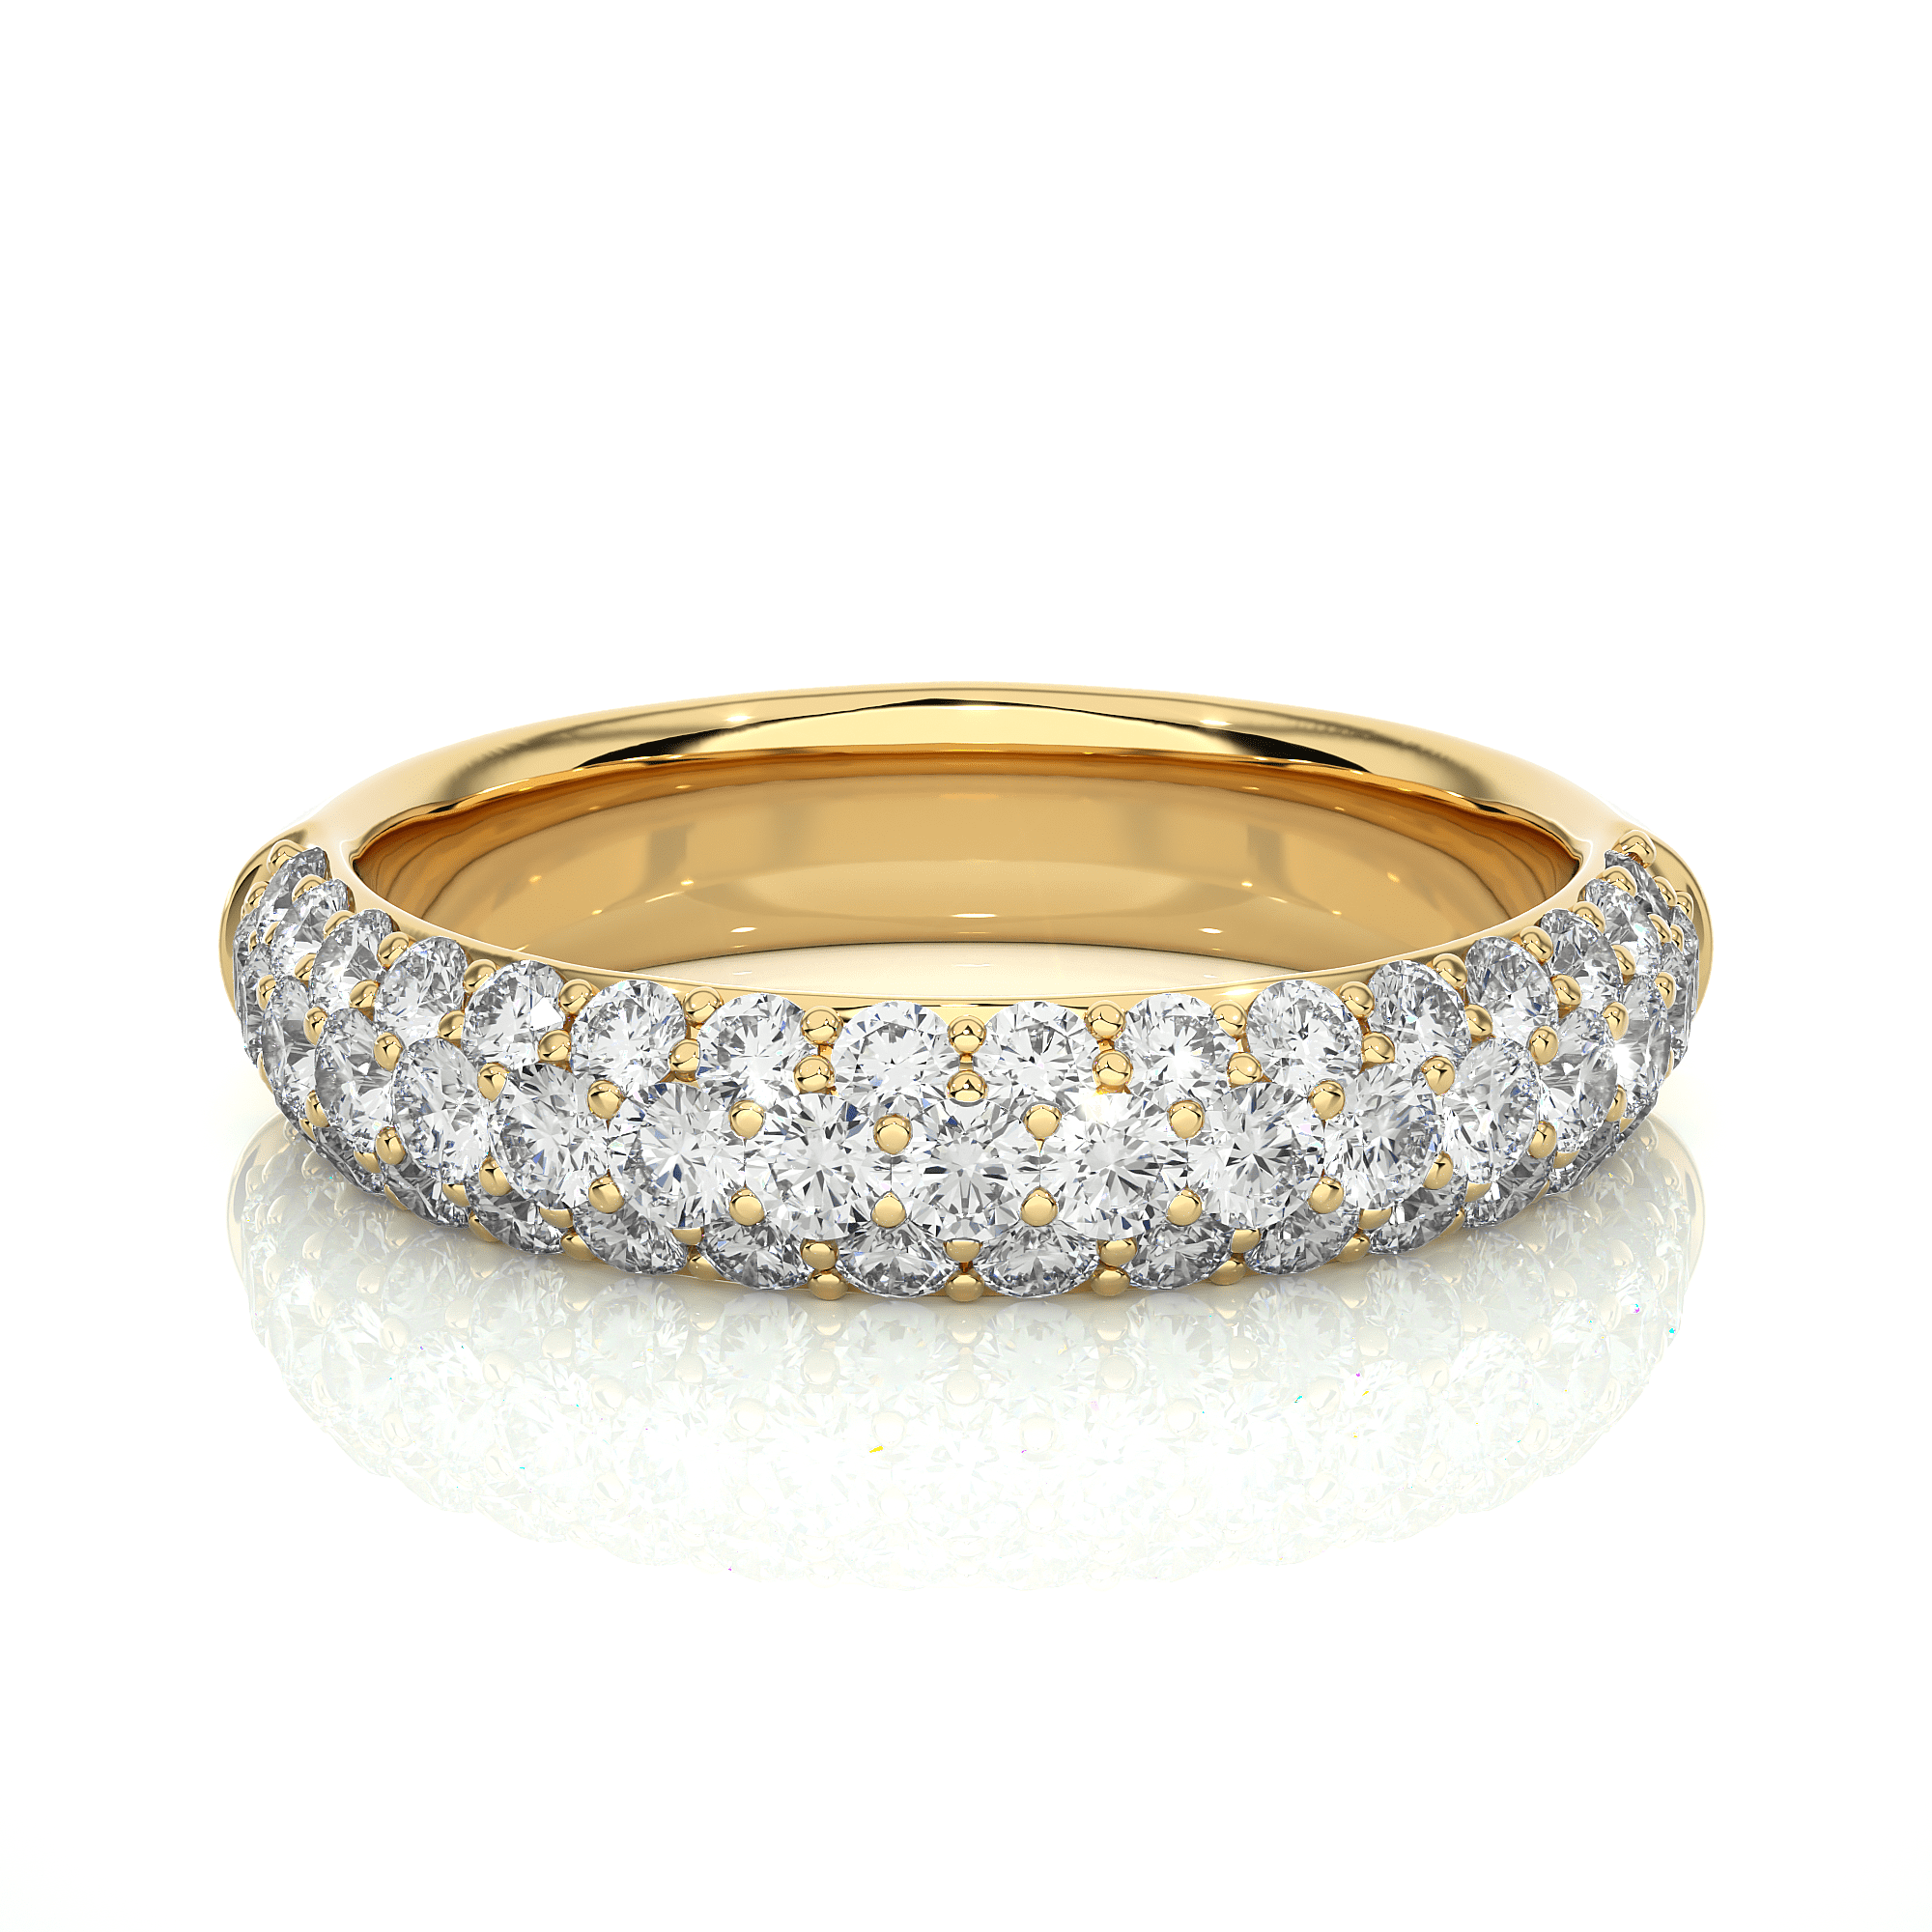 Primal Diamond Ring